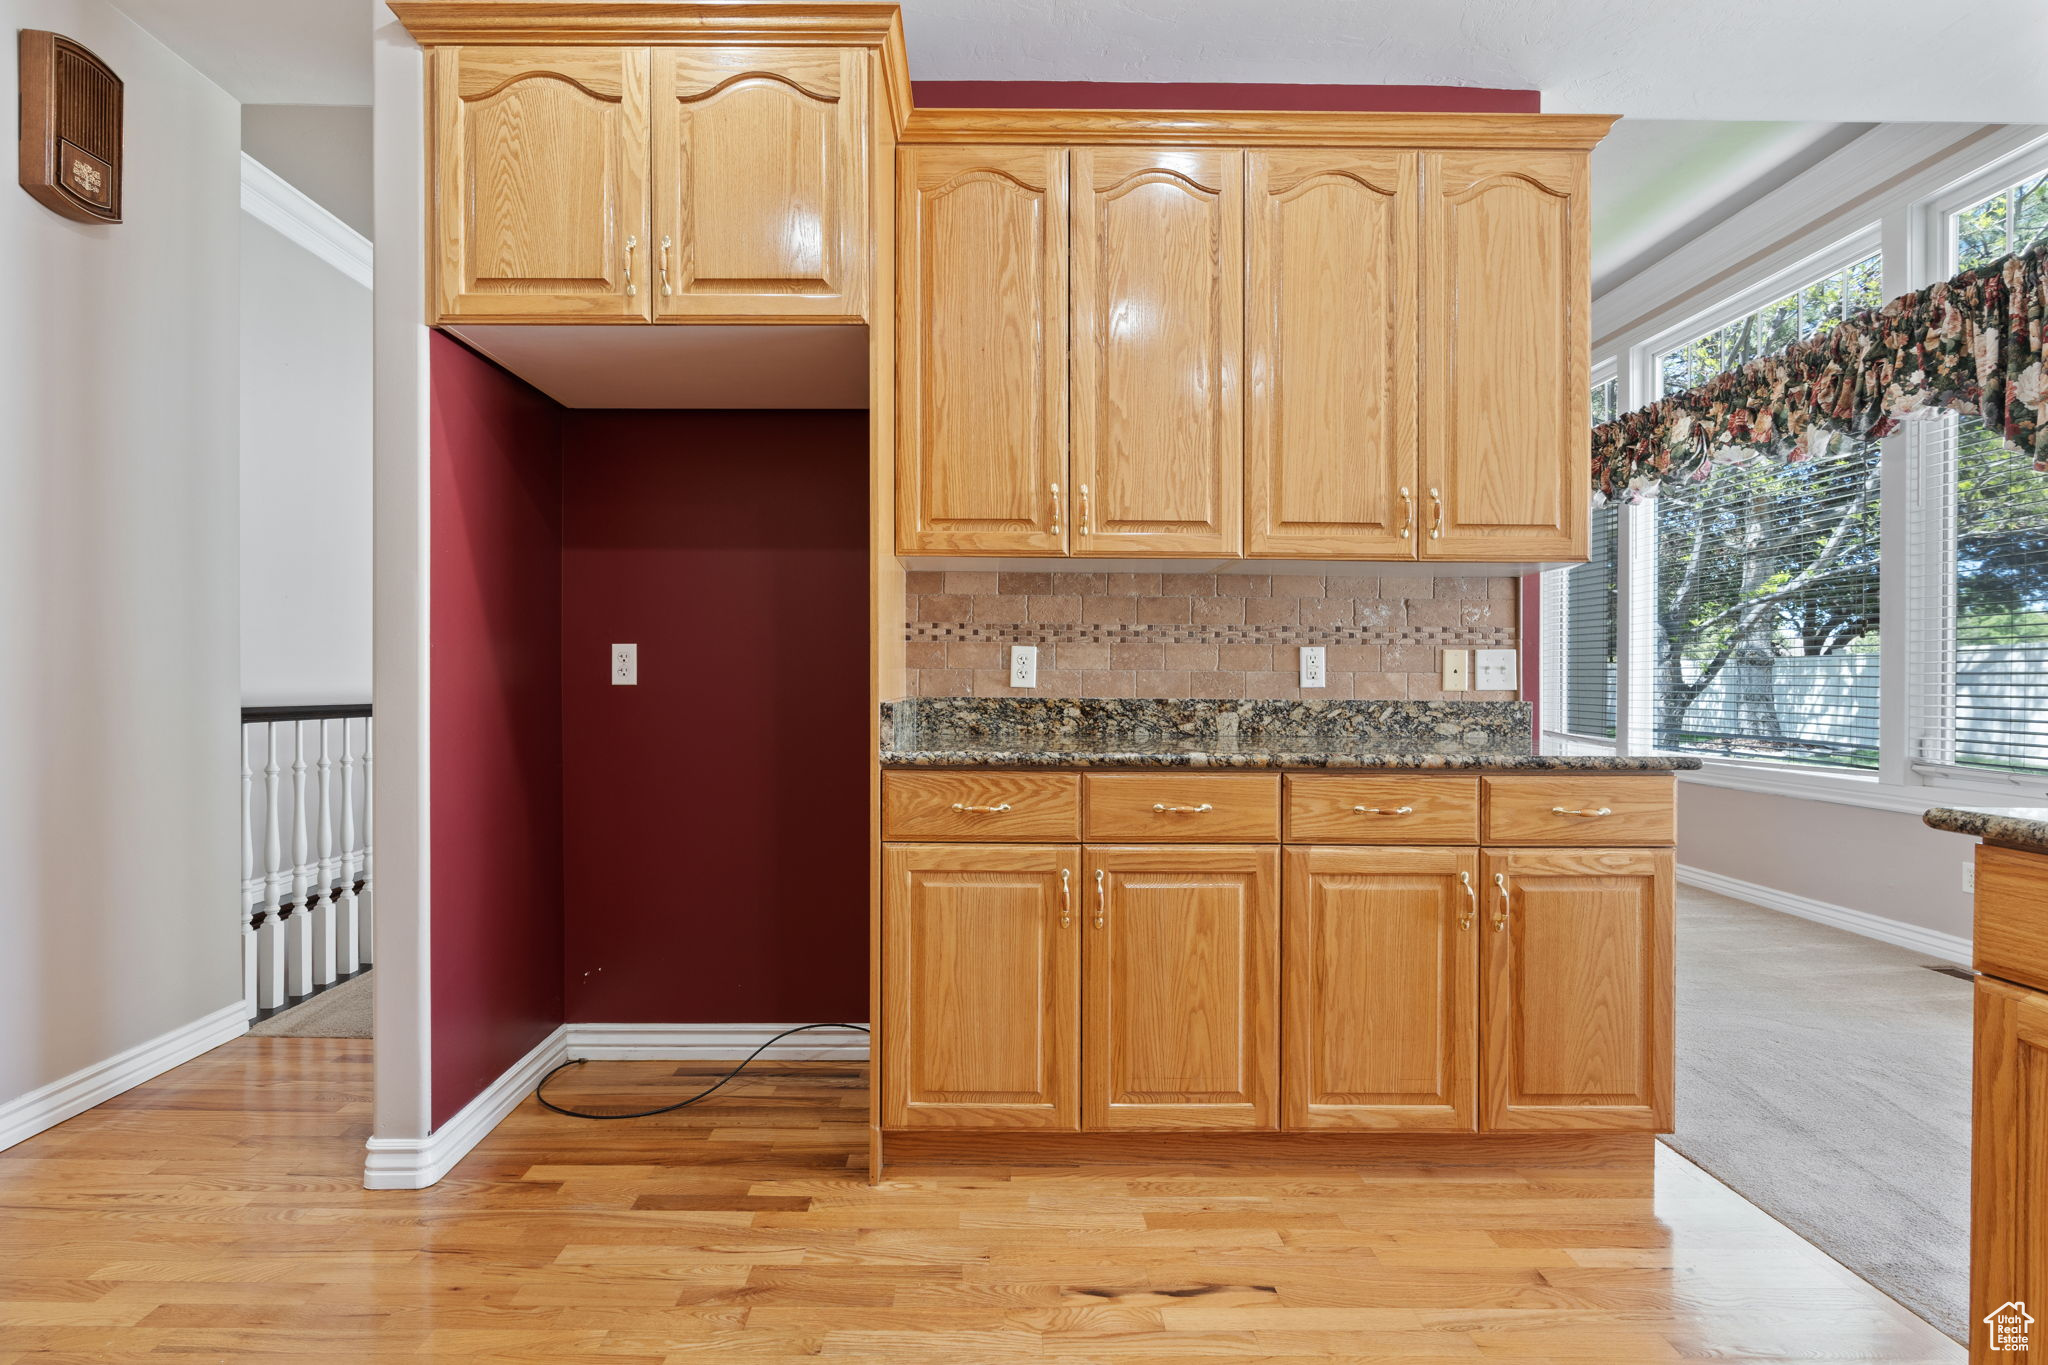 Kitchen featuring light colored carpet, plenty of natural light, tasteful backsplash, and dark stone countertops